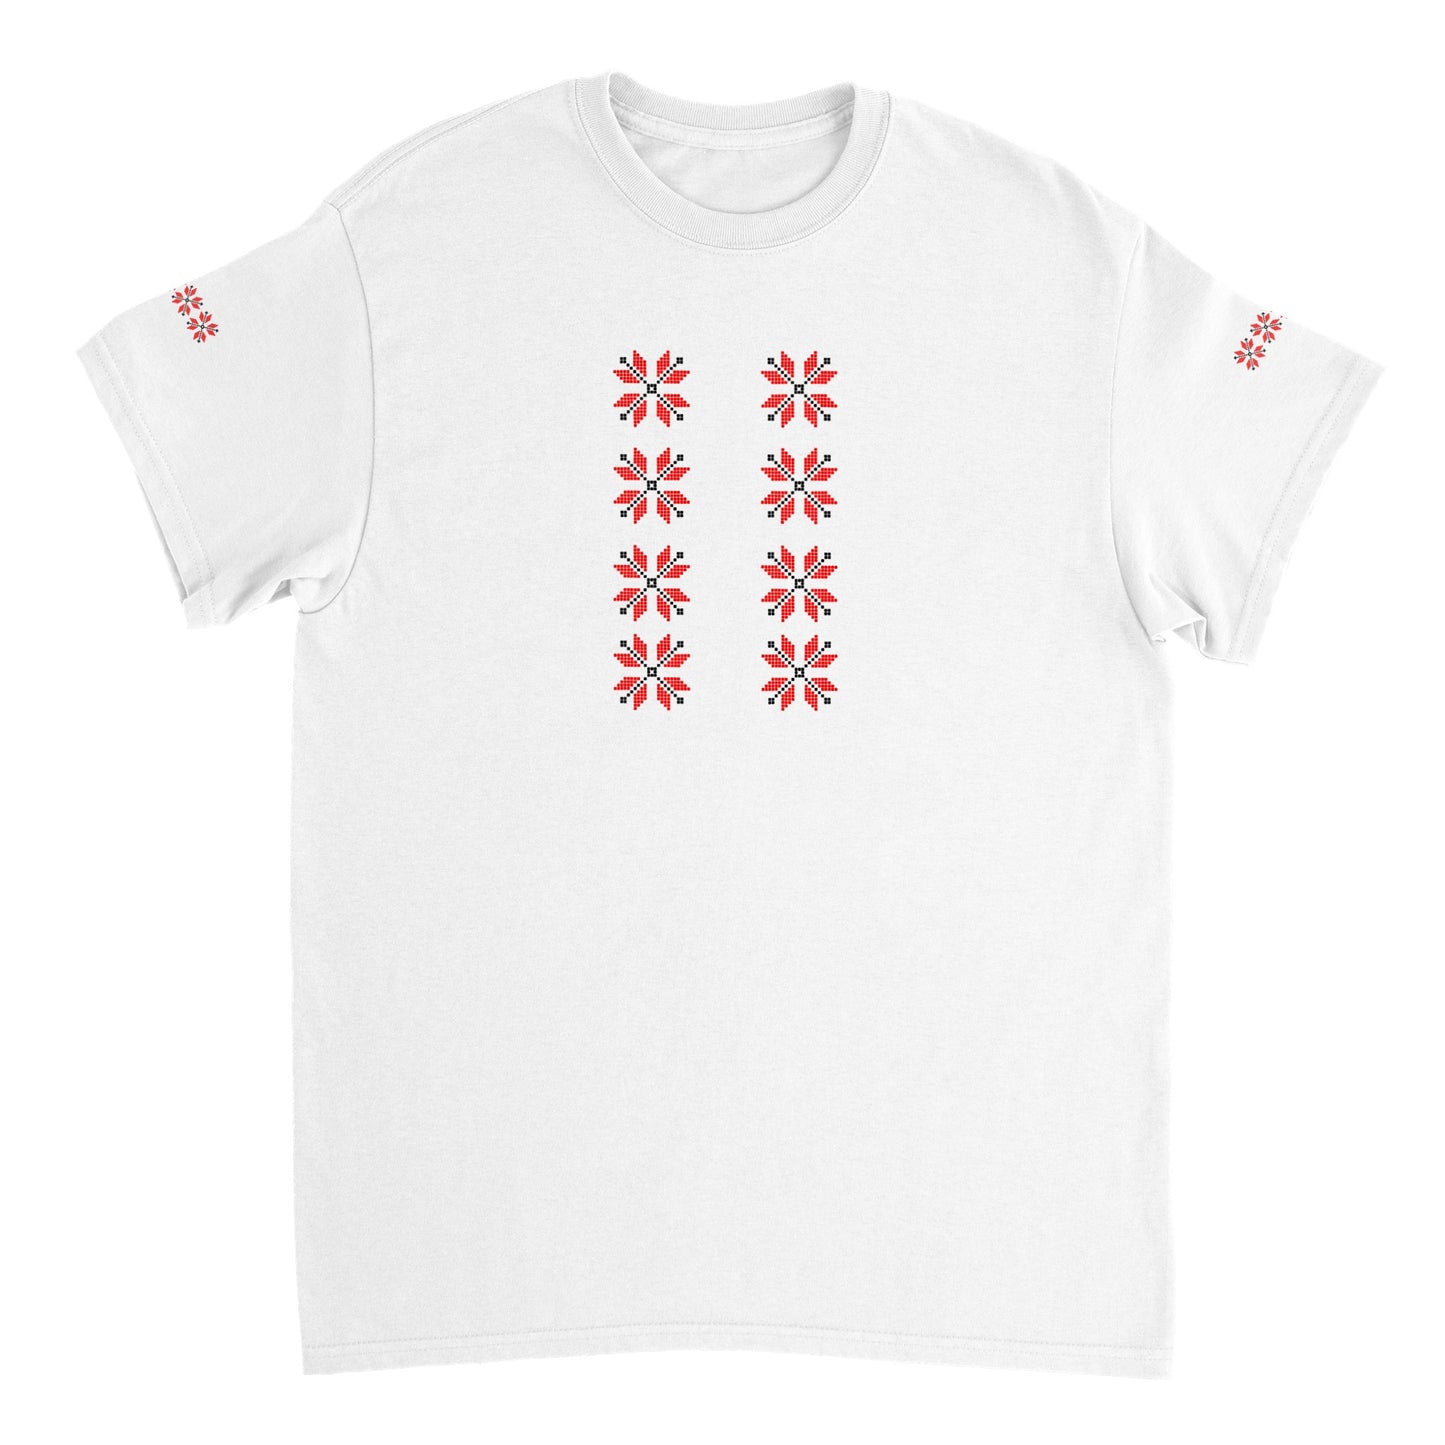 Heavyweight Unisex Crewneck T-shirt "Embroidery"